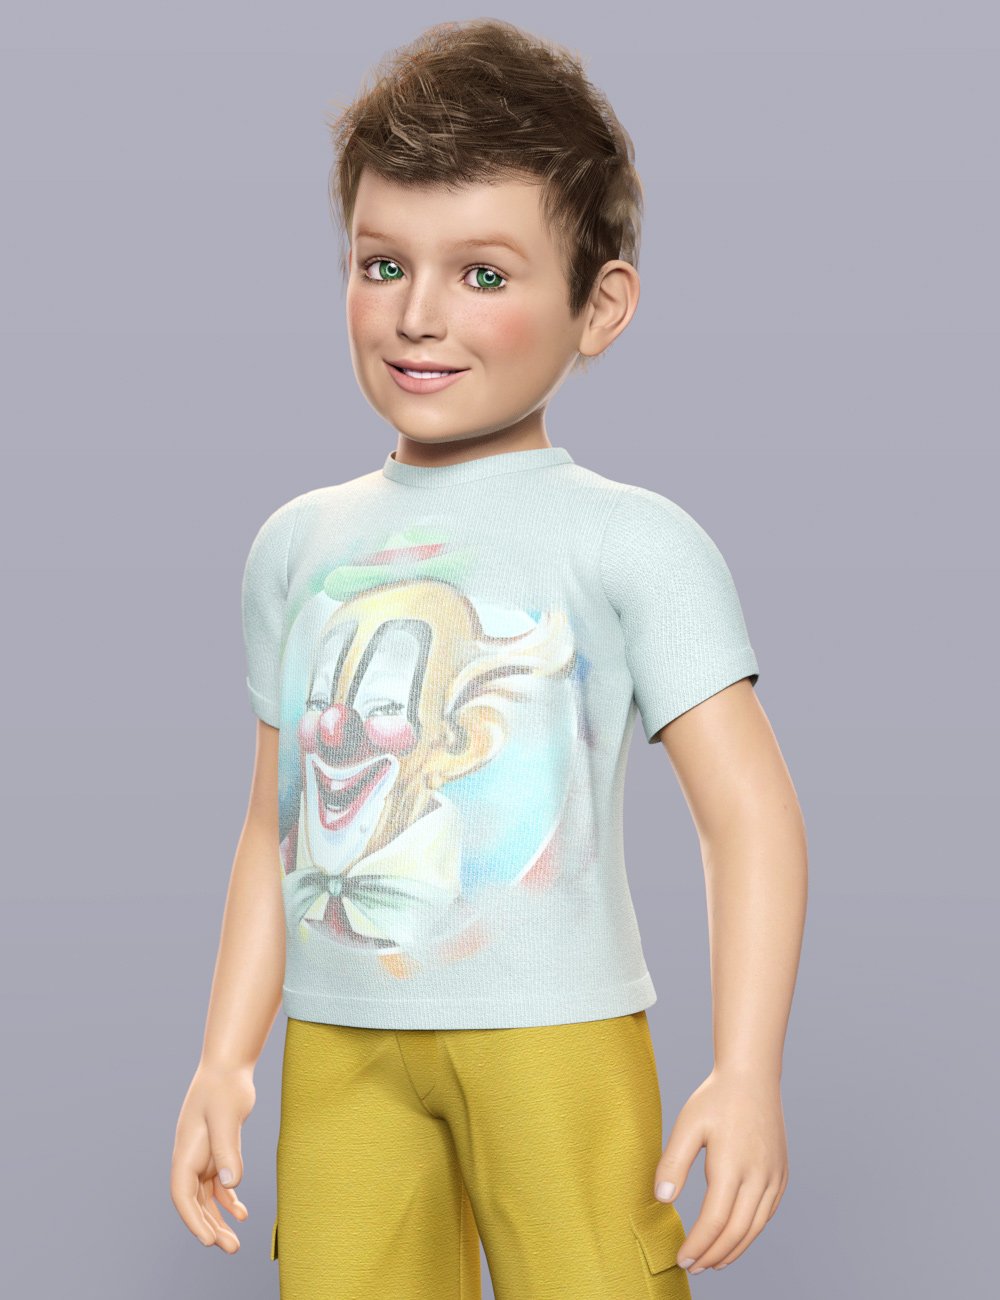 The Kids 4 Base by: joelegeckomutedbanshee, 3D Models by Daz 3D